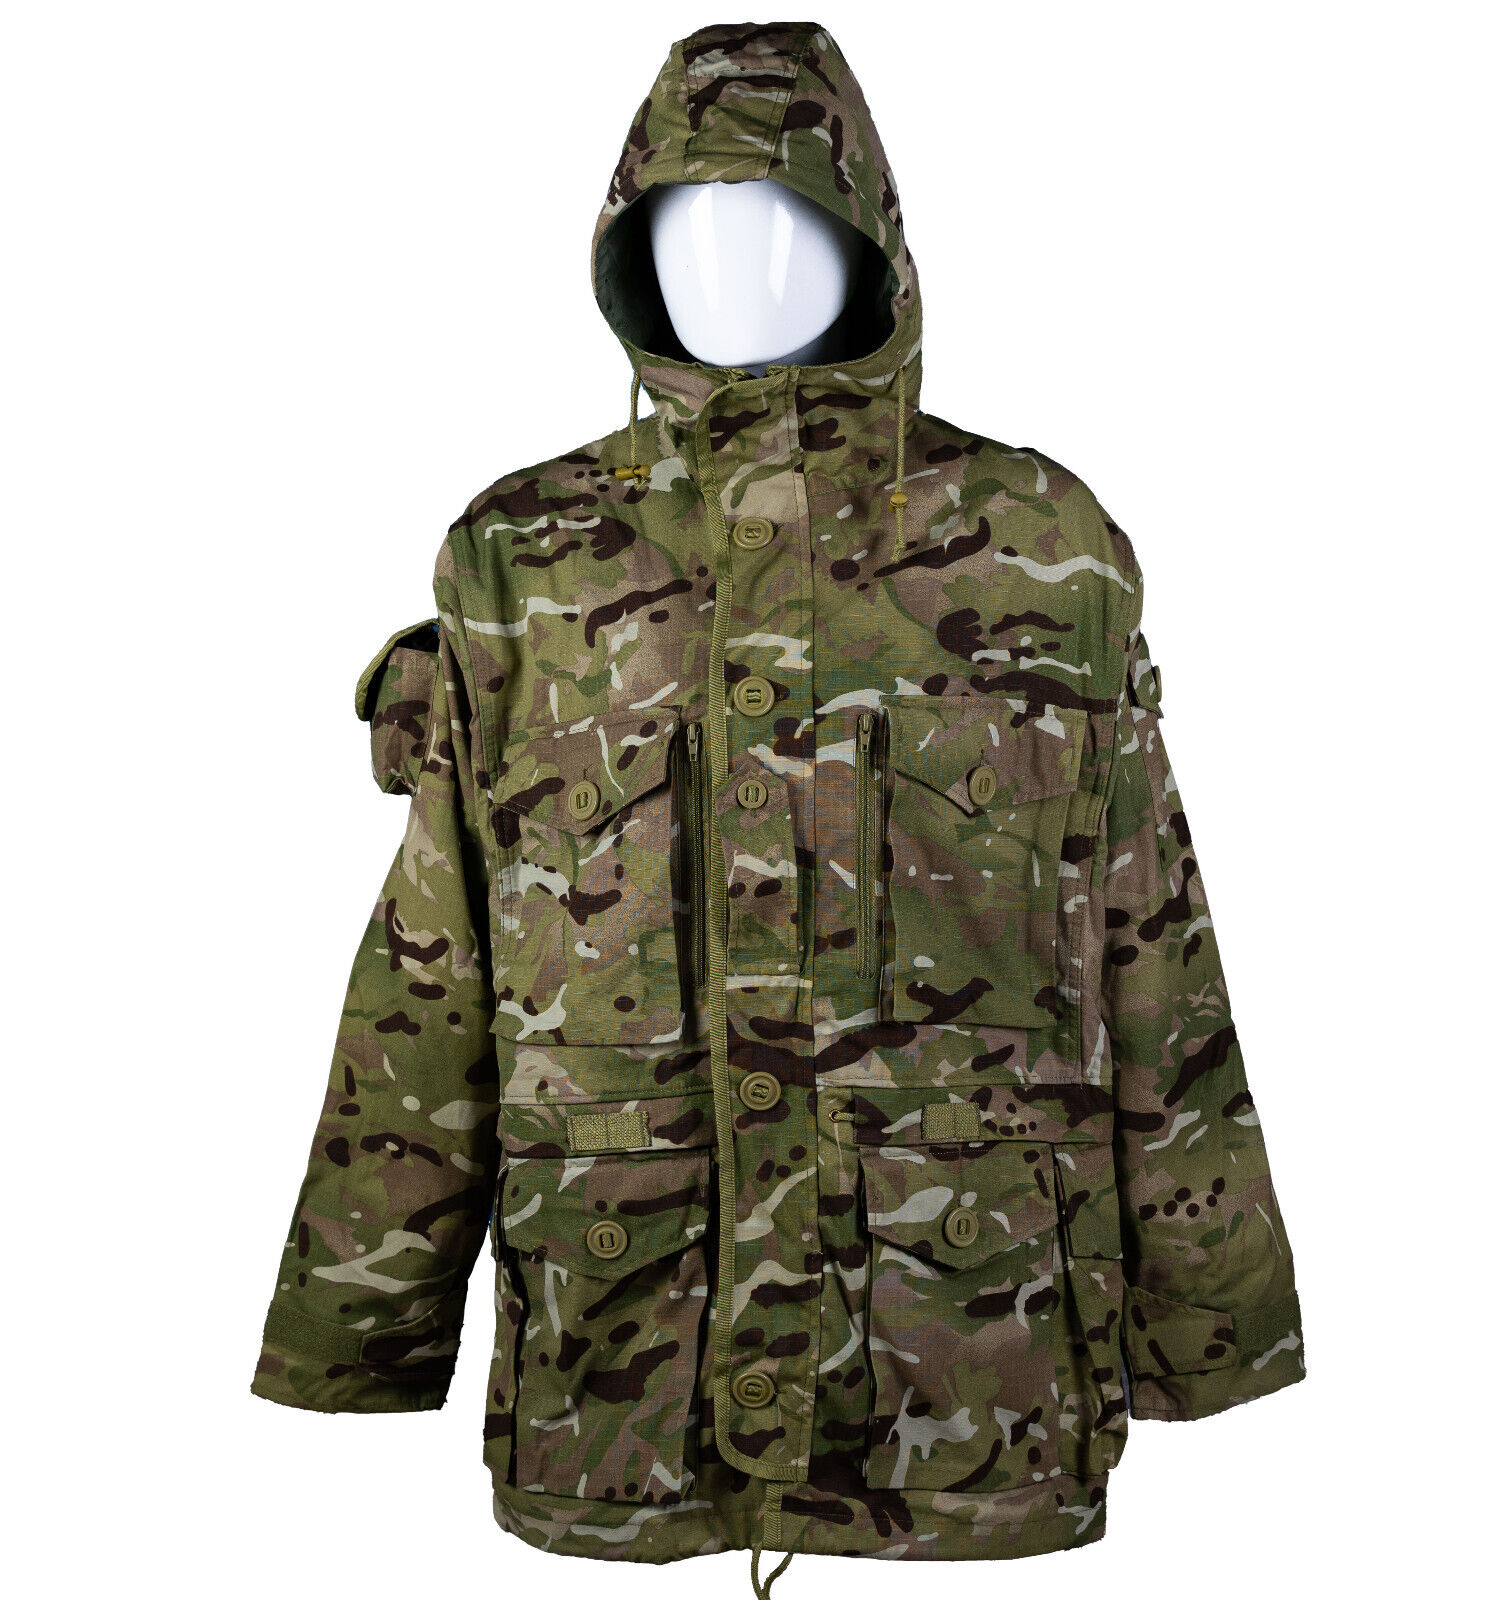 KitPimp British Army MTP SAS Smock Jacket Coat NYCO Waterproof Multicam Military